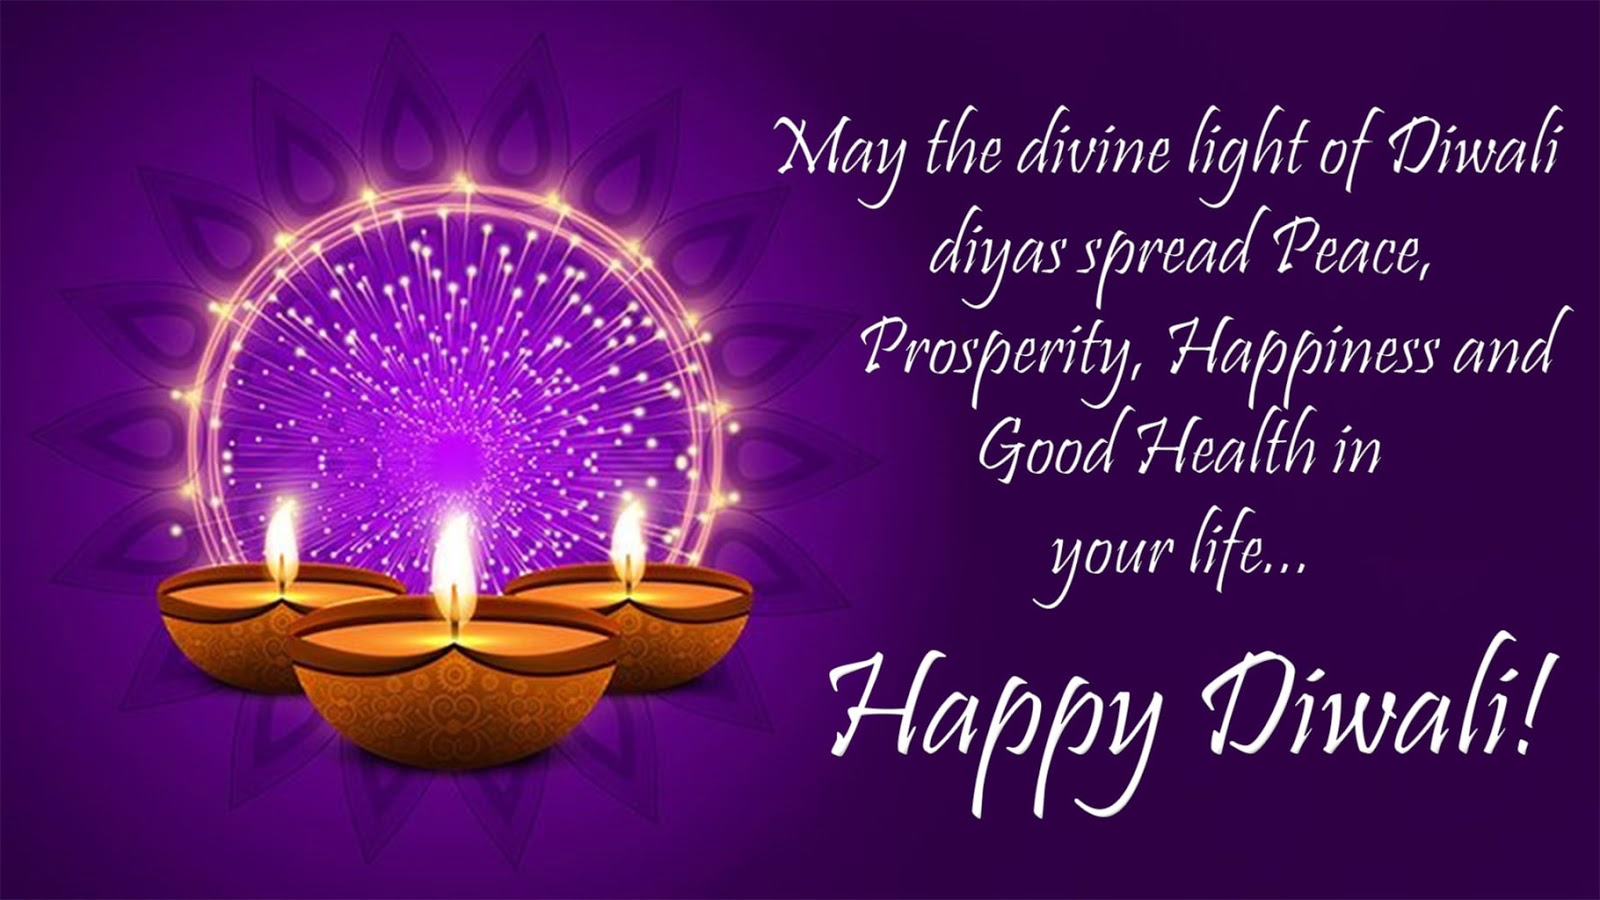 2020 Happy Diwali Images, Wishes || HD Images || Hindi Diwali ...